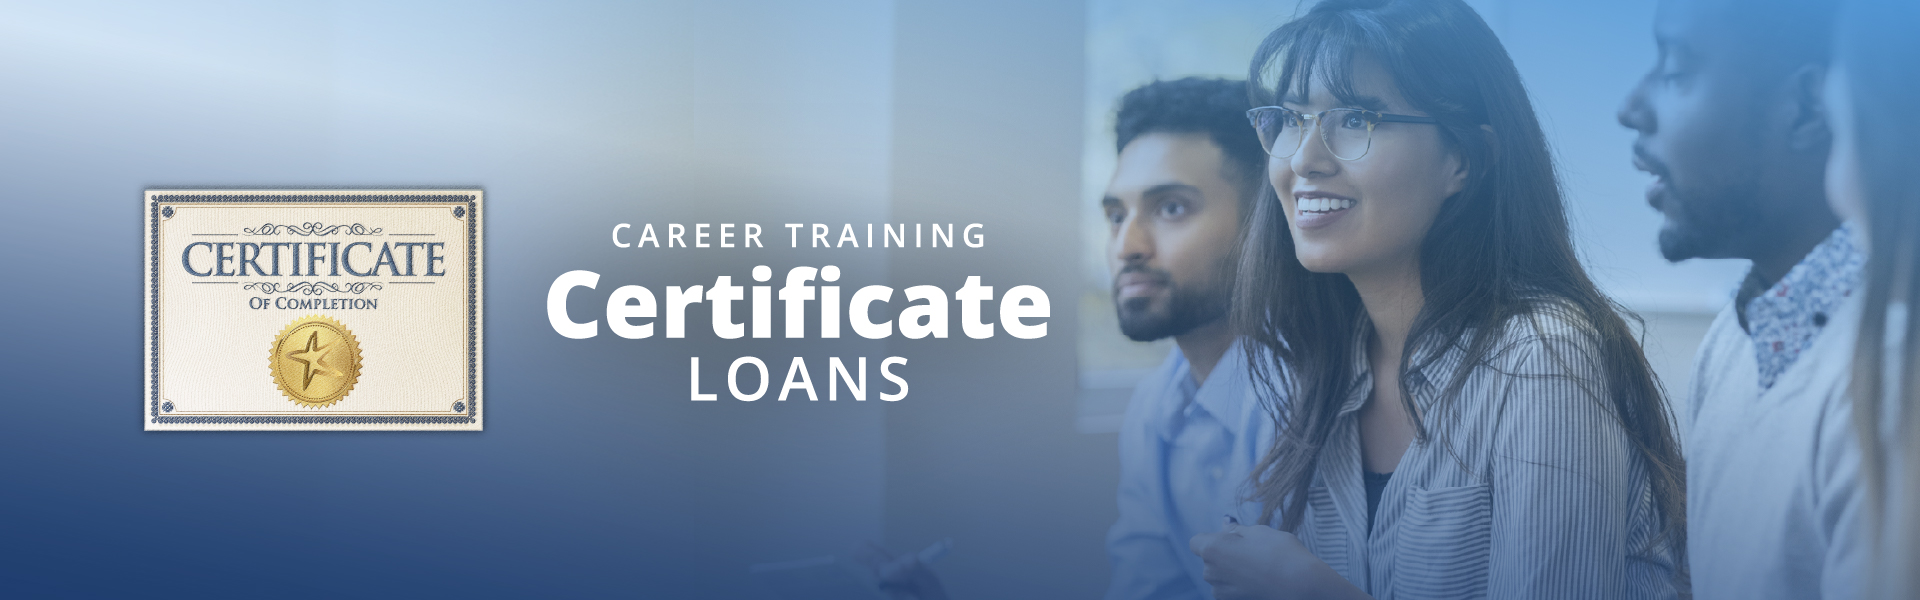 career training certificat loan